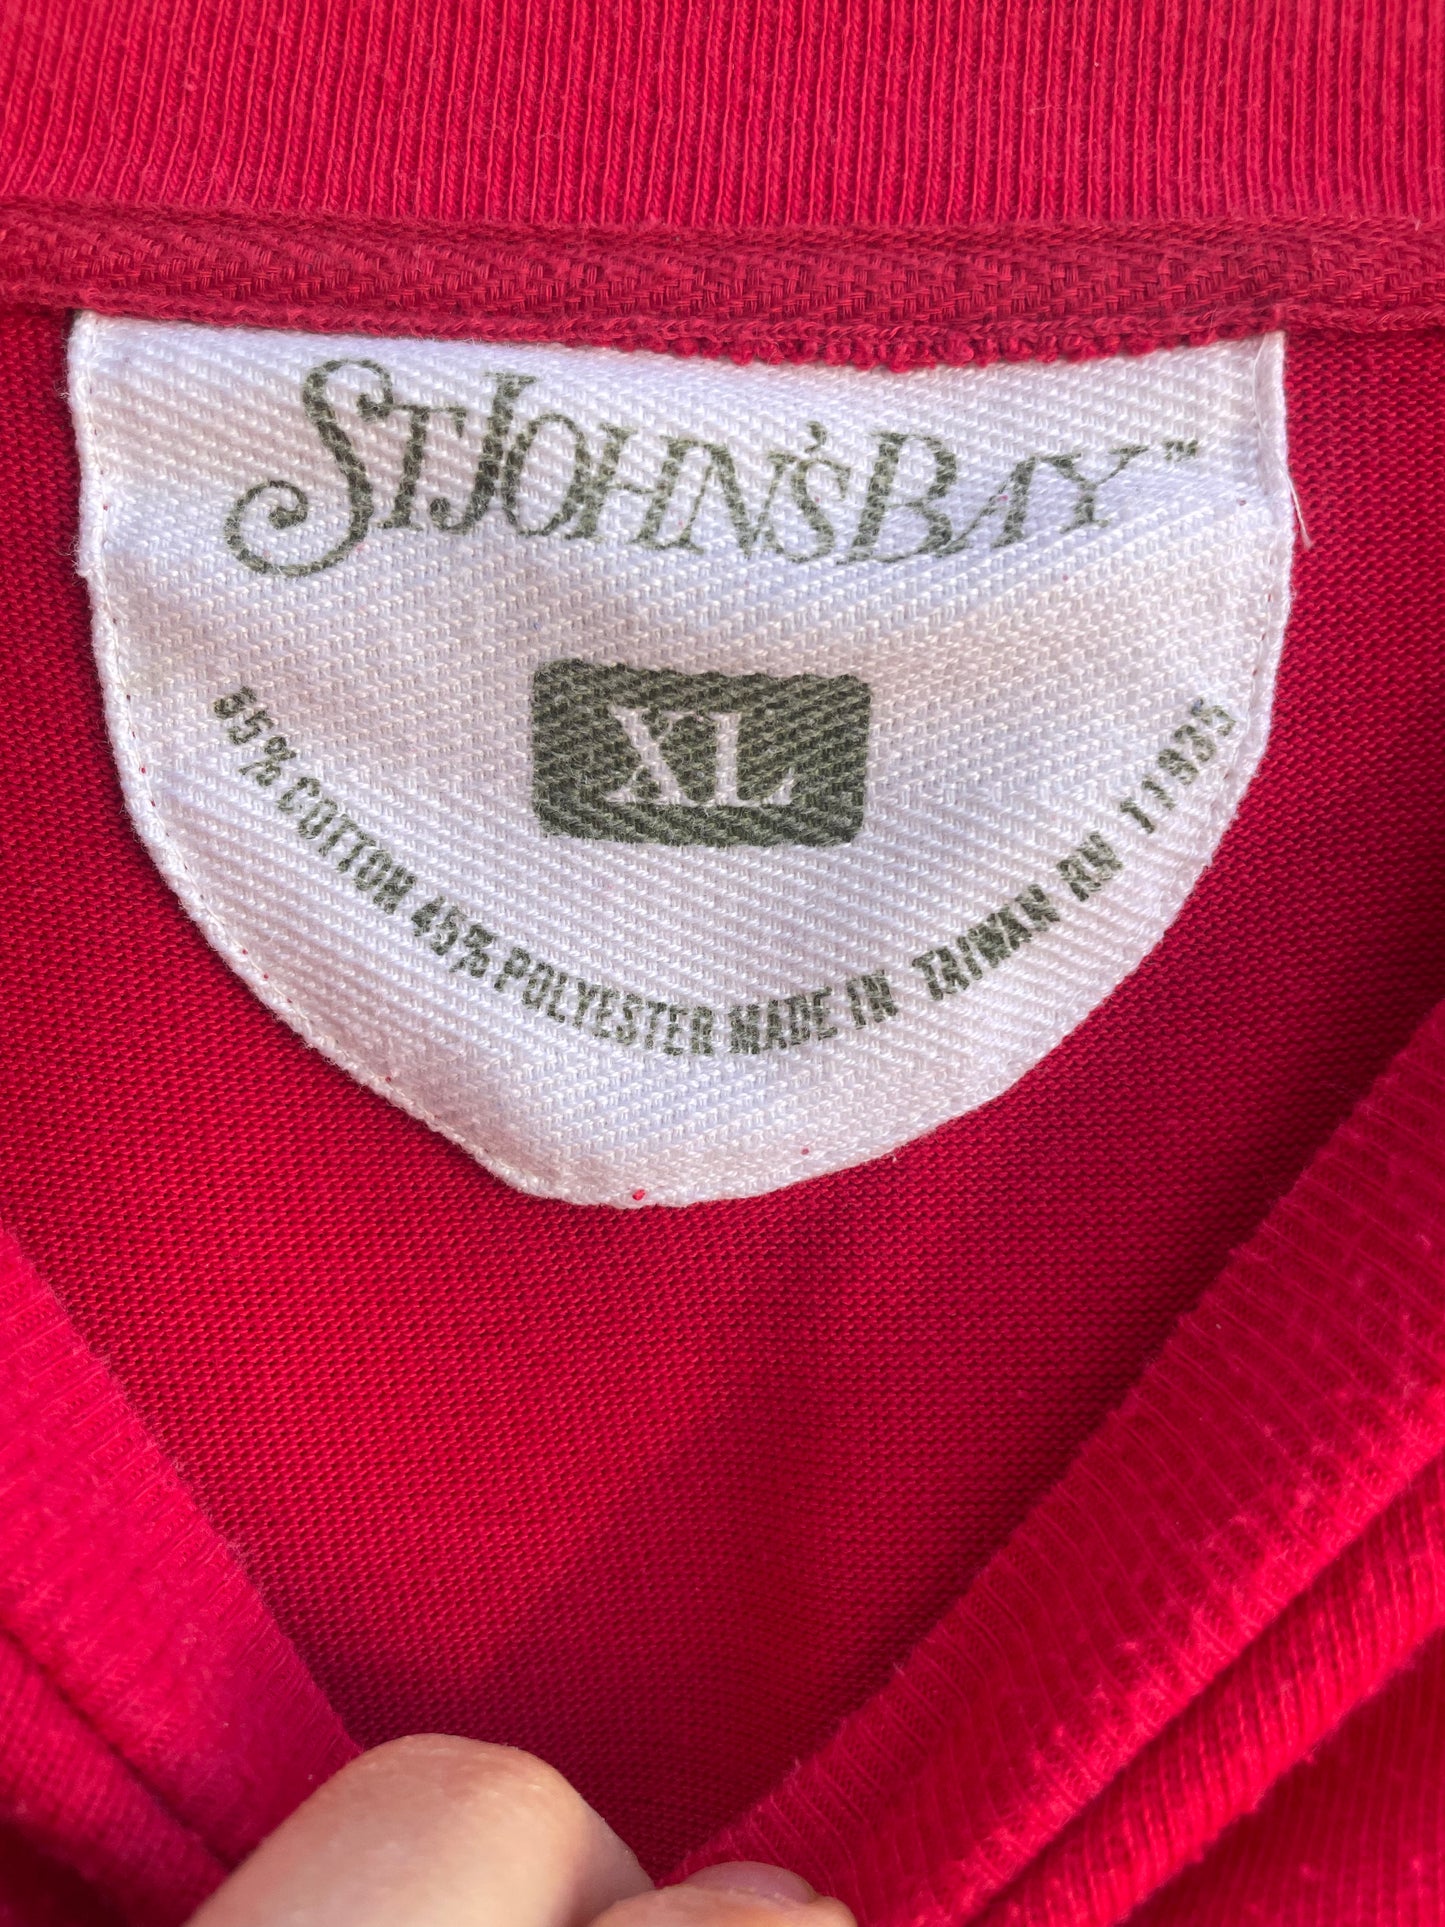 Rugby stripe sweatshirt - St John's Bay